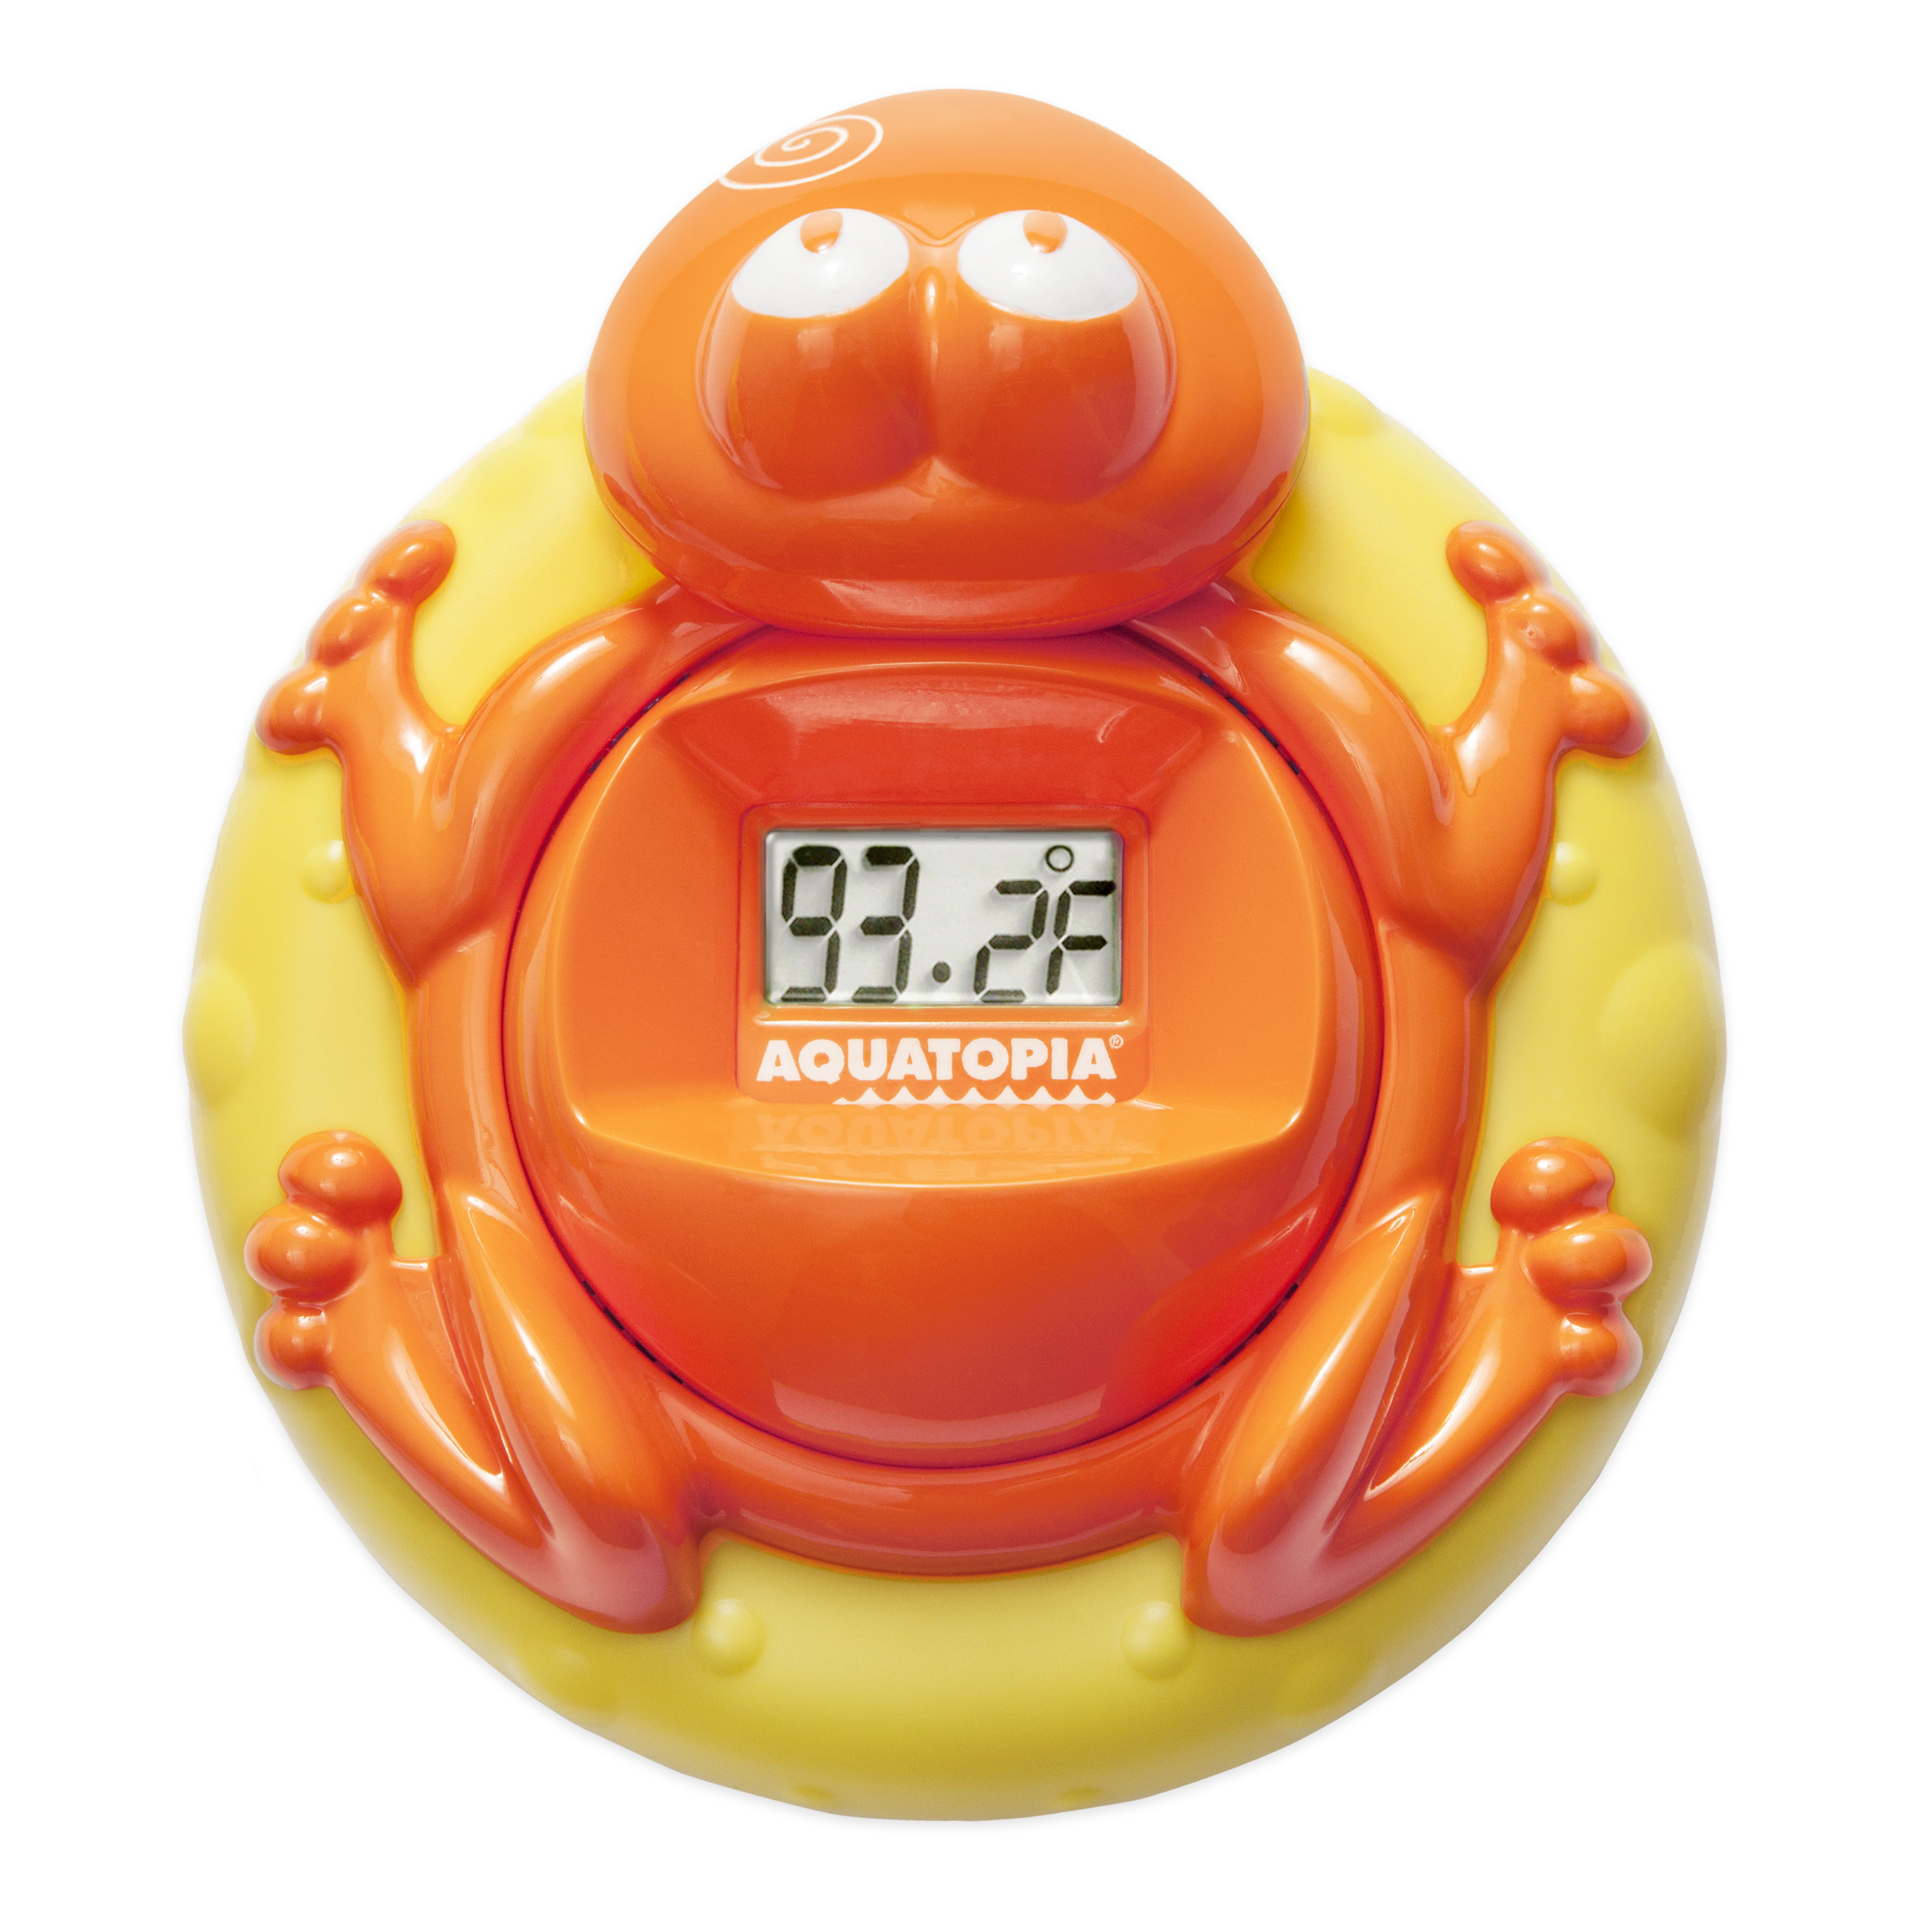 Aquatopia Bath Thermometer, Digital Audible Alarm, Orange - image 1 of 6